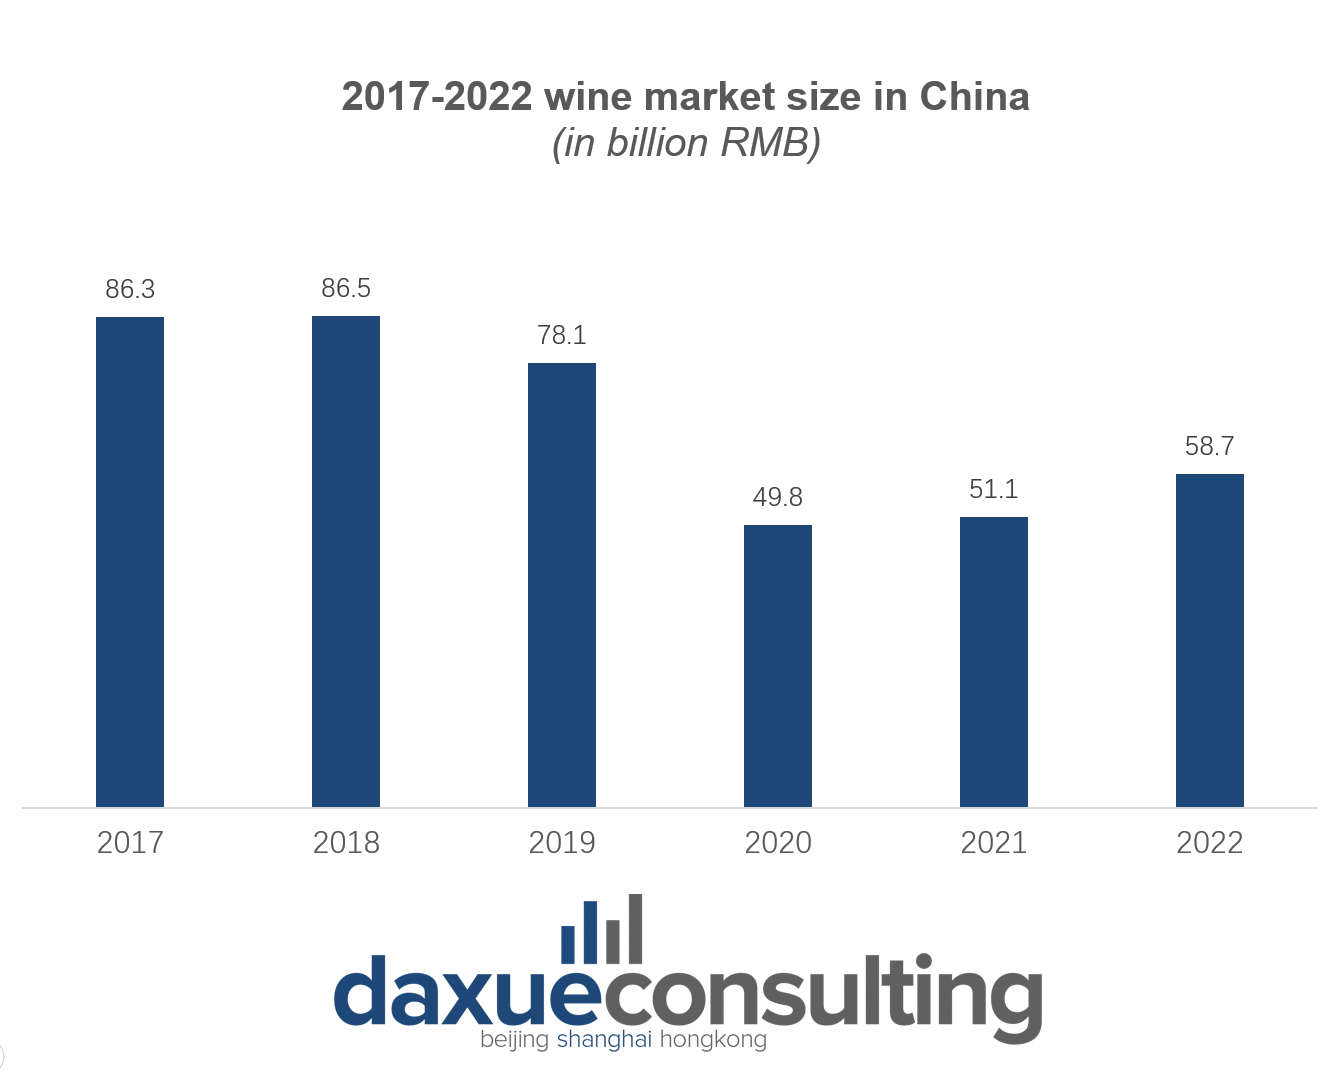 China's wine market size